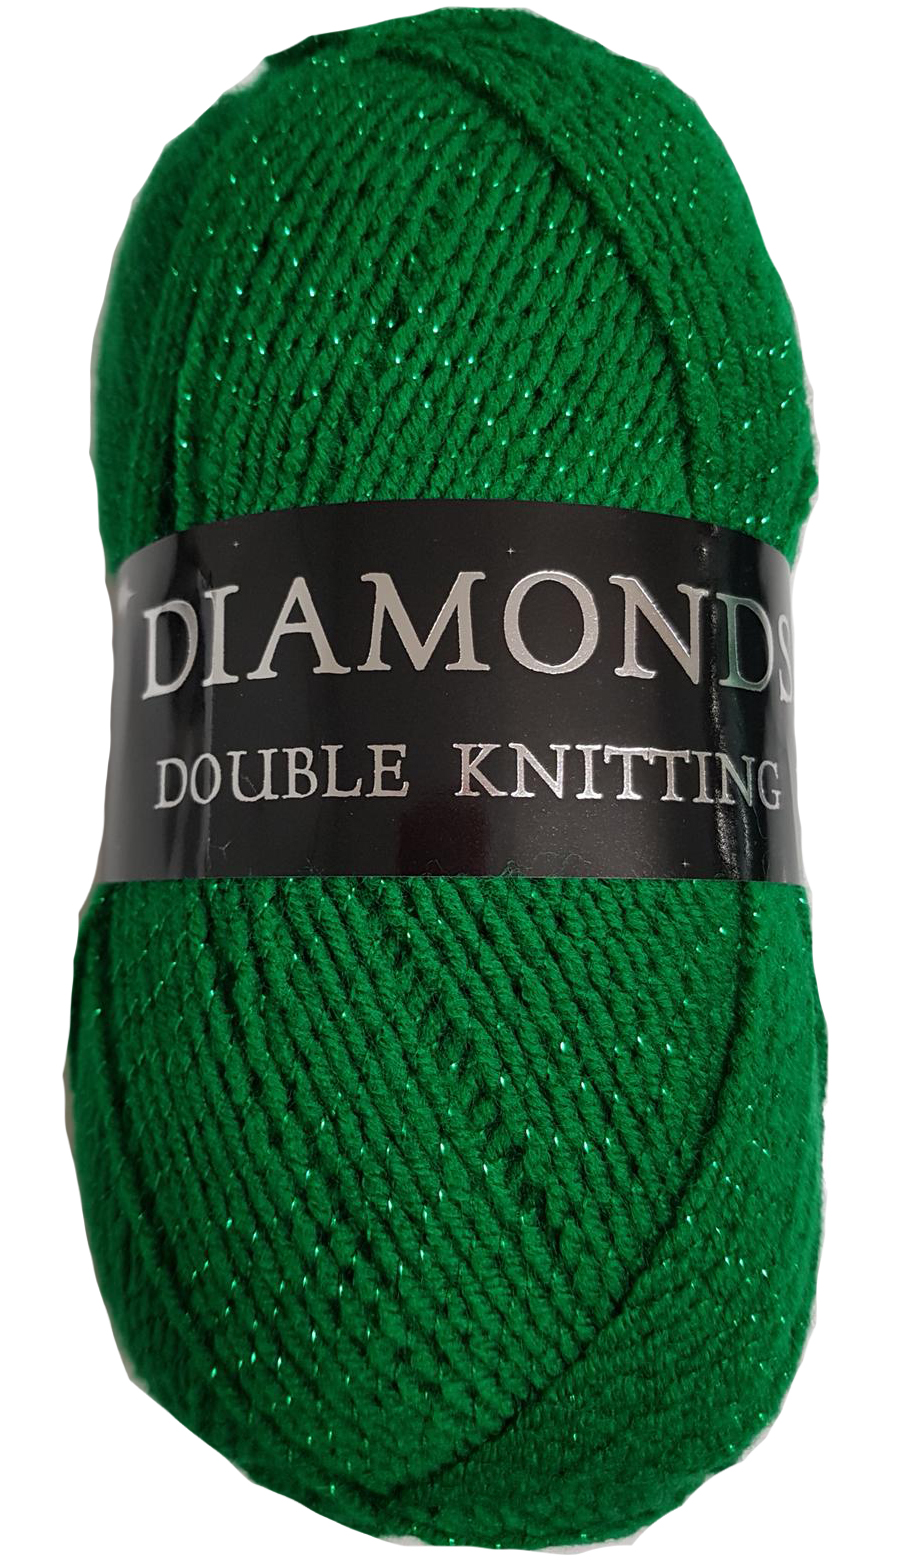 Diamonds DK Yarn x10 Balls Emerald 413 - Click Image to Close